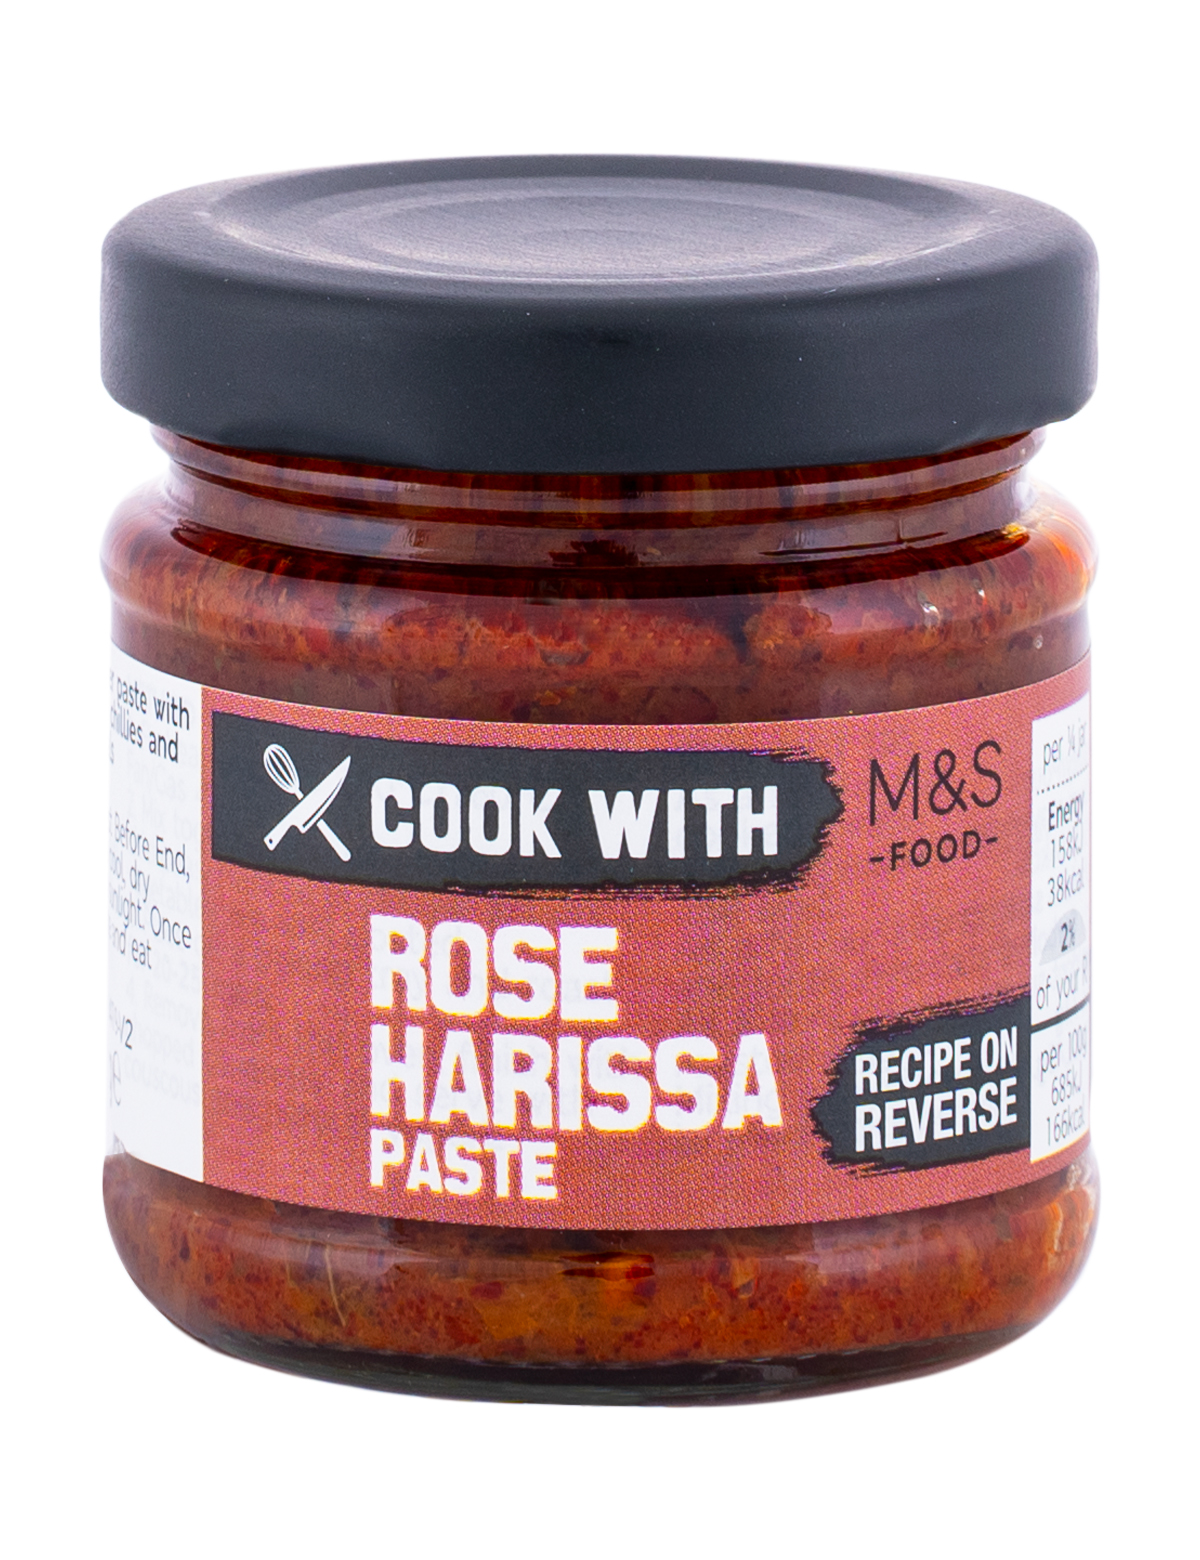 ROSE HARISSA PASTE - Marks & Spencer